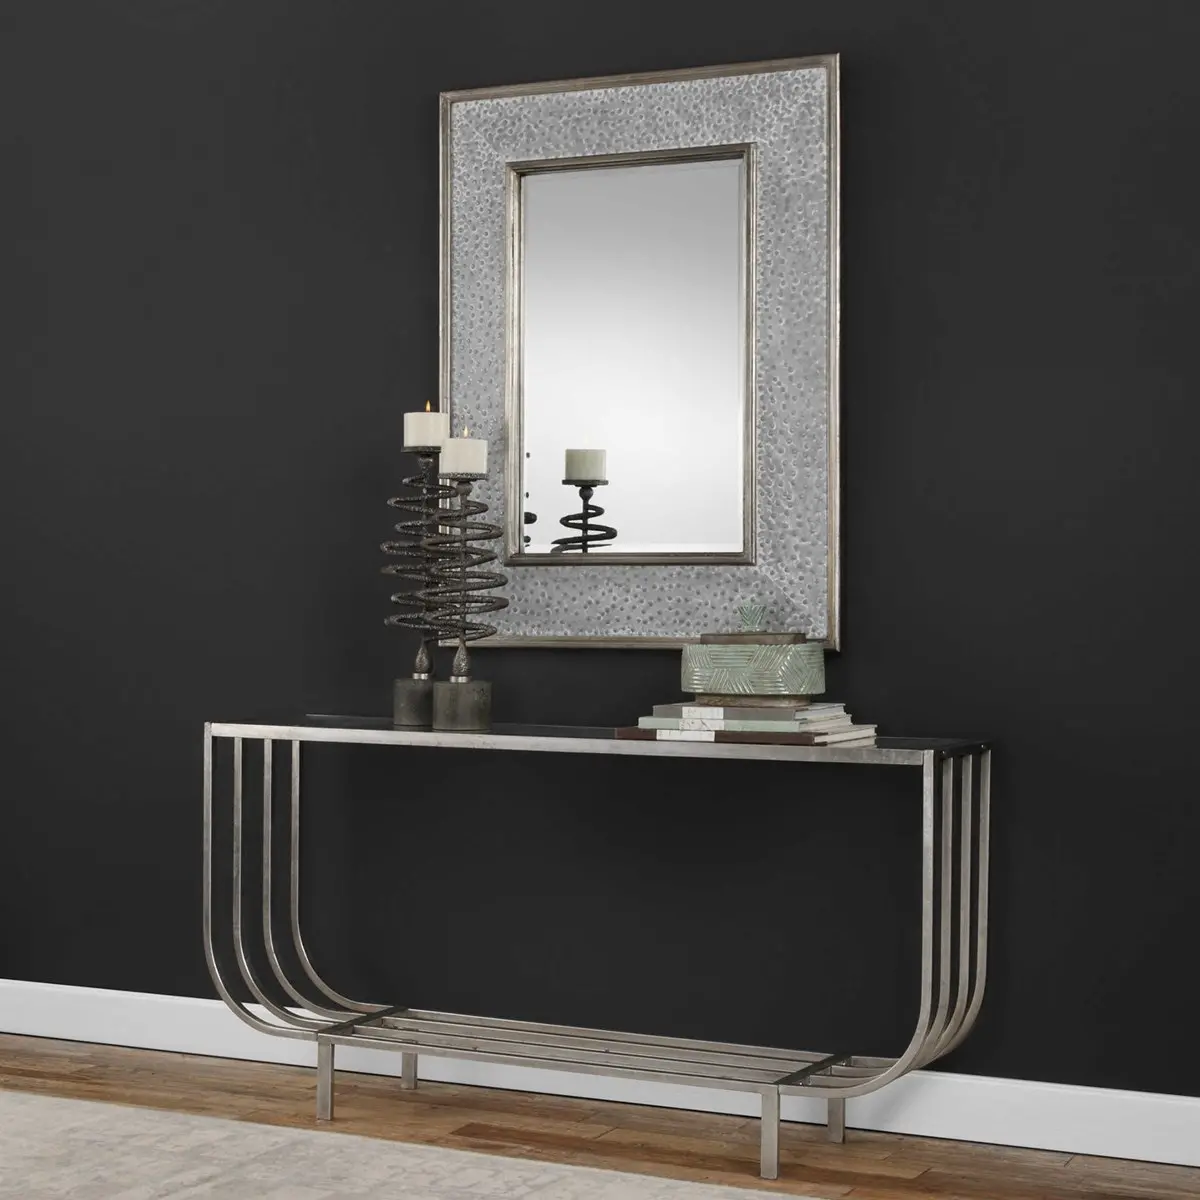 Dark gray wall big mirror and metal table